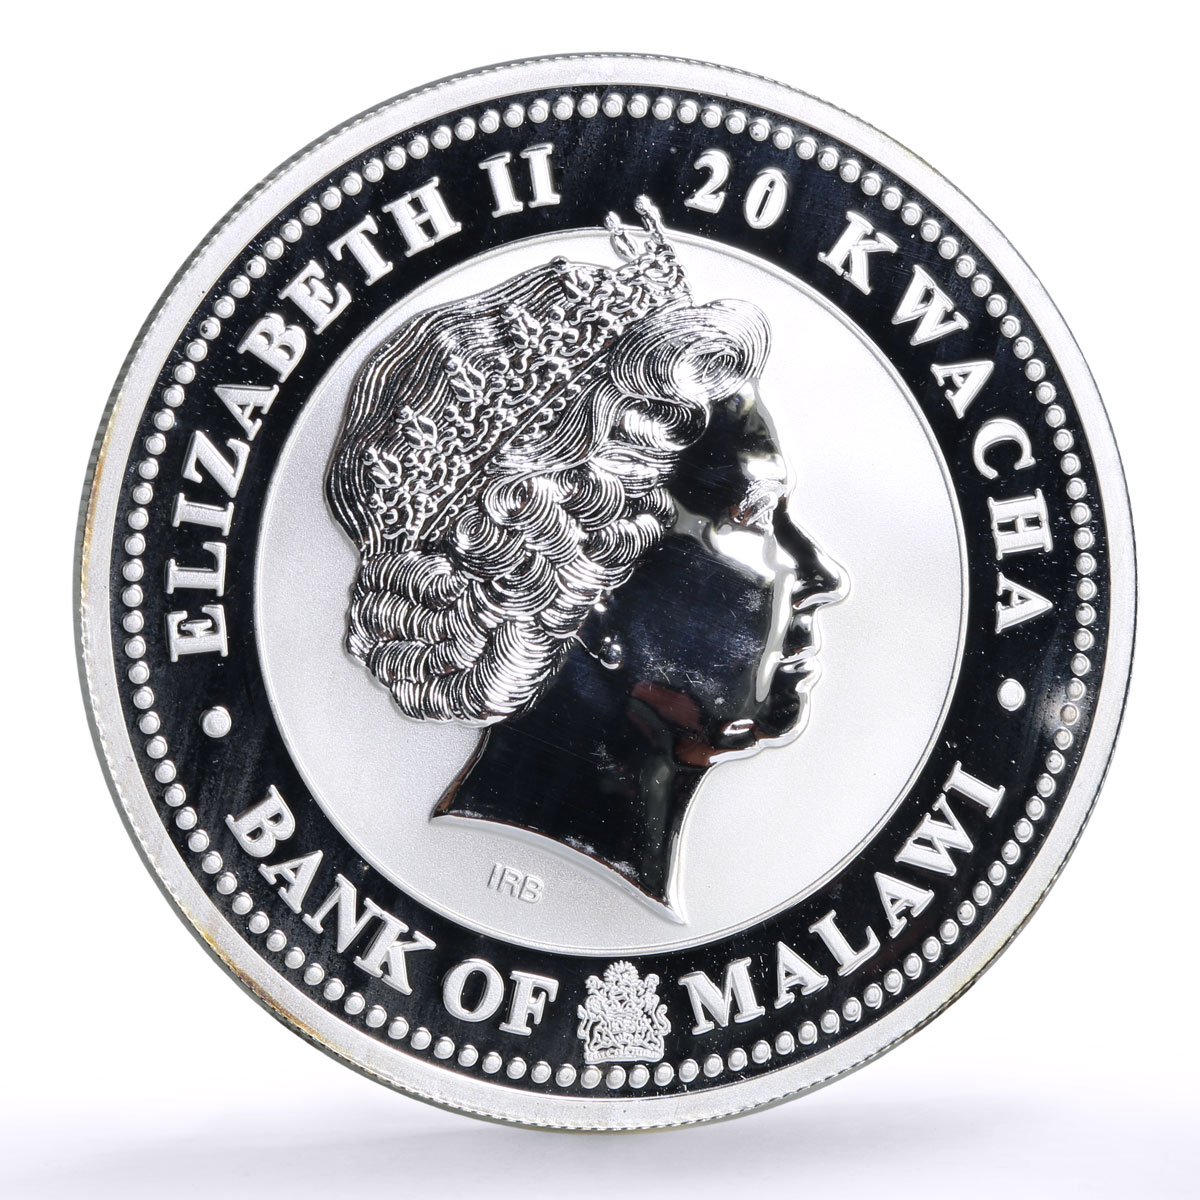 Malawi 20 kwacha Lunar Calendar Year of the Ox Sitting colored silver coin 2009